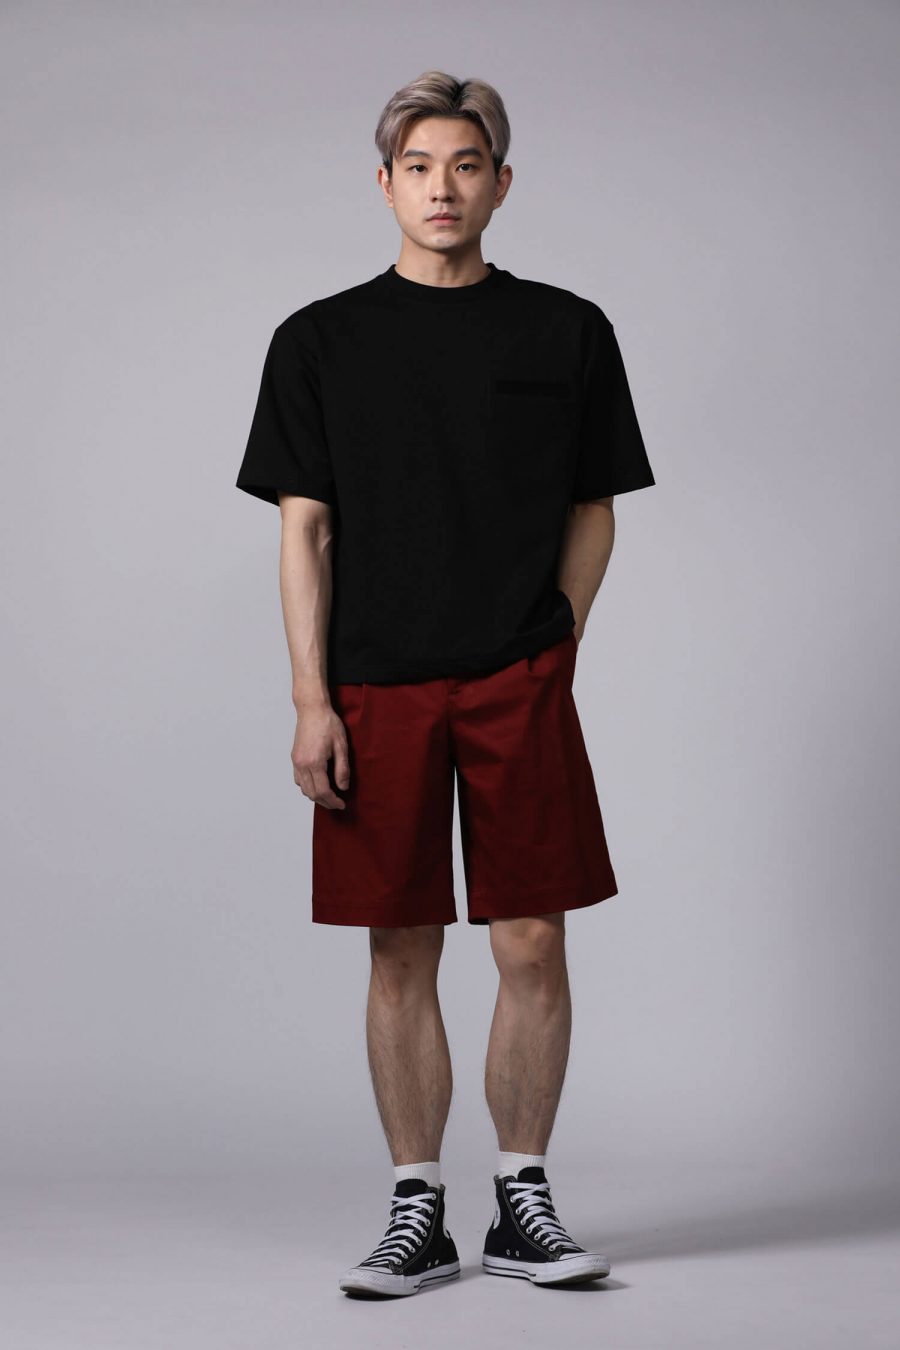 bermuda-shorts-for-men-singapore